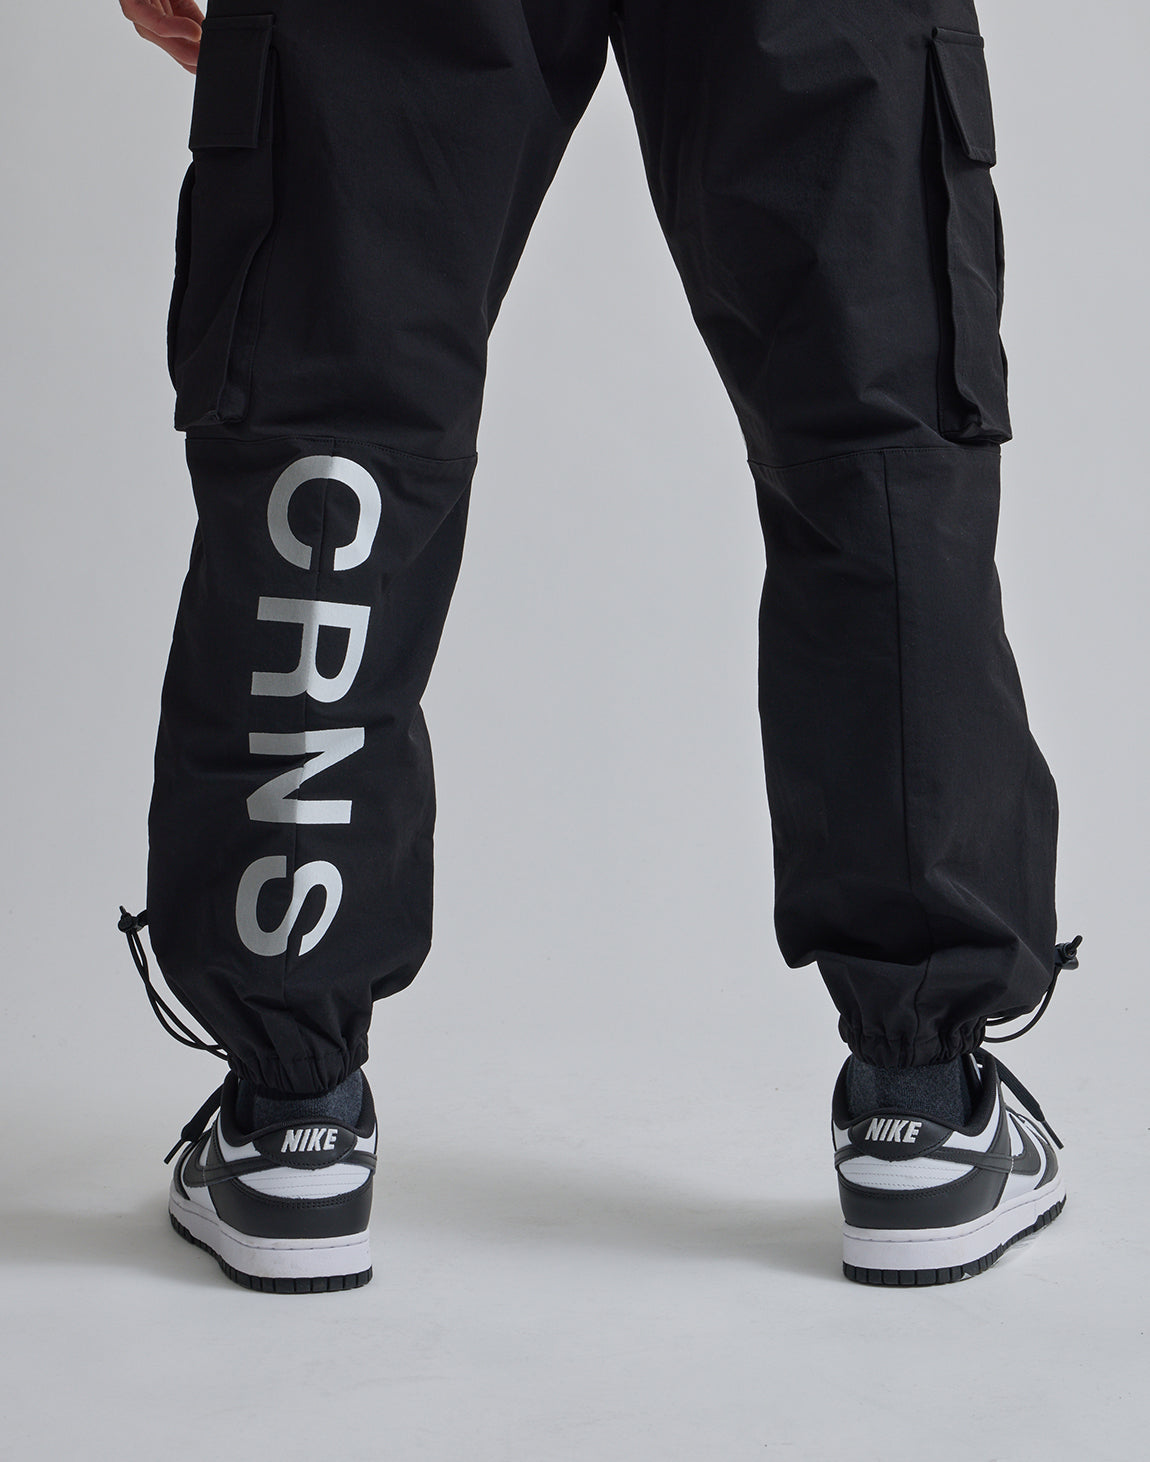 CRONOS SP0011 model pants BLACKその他